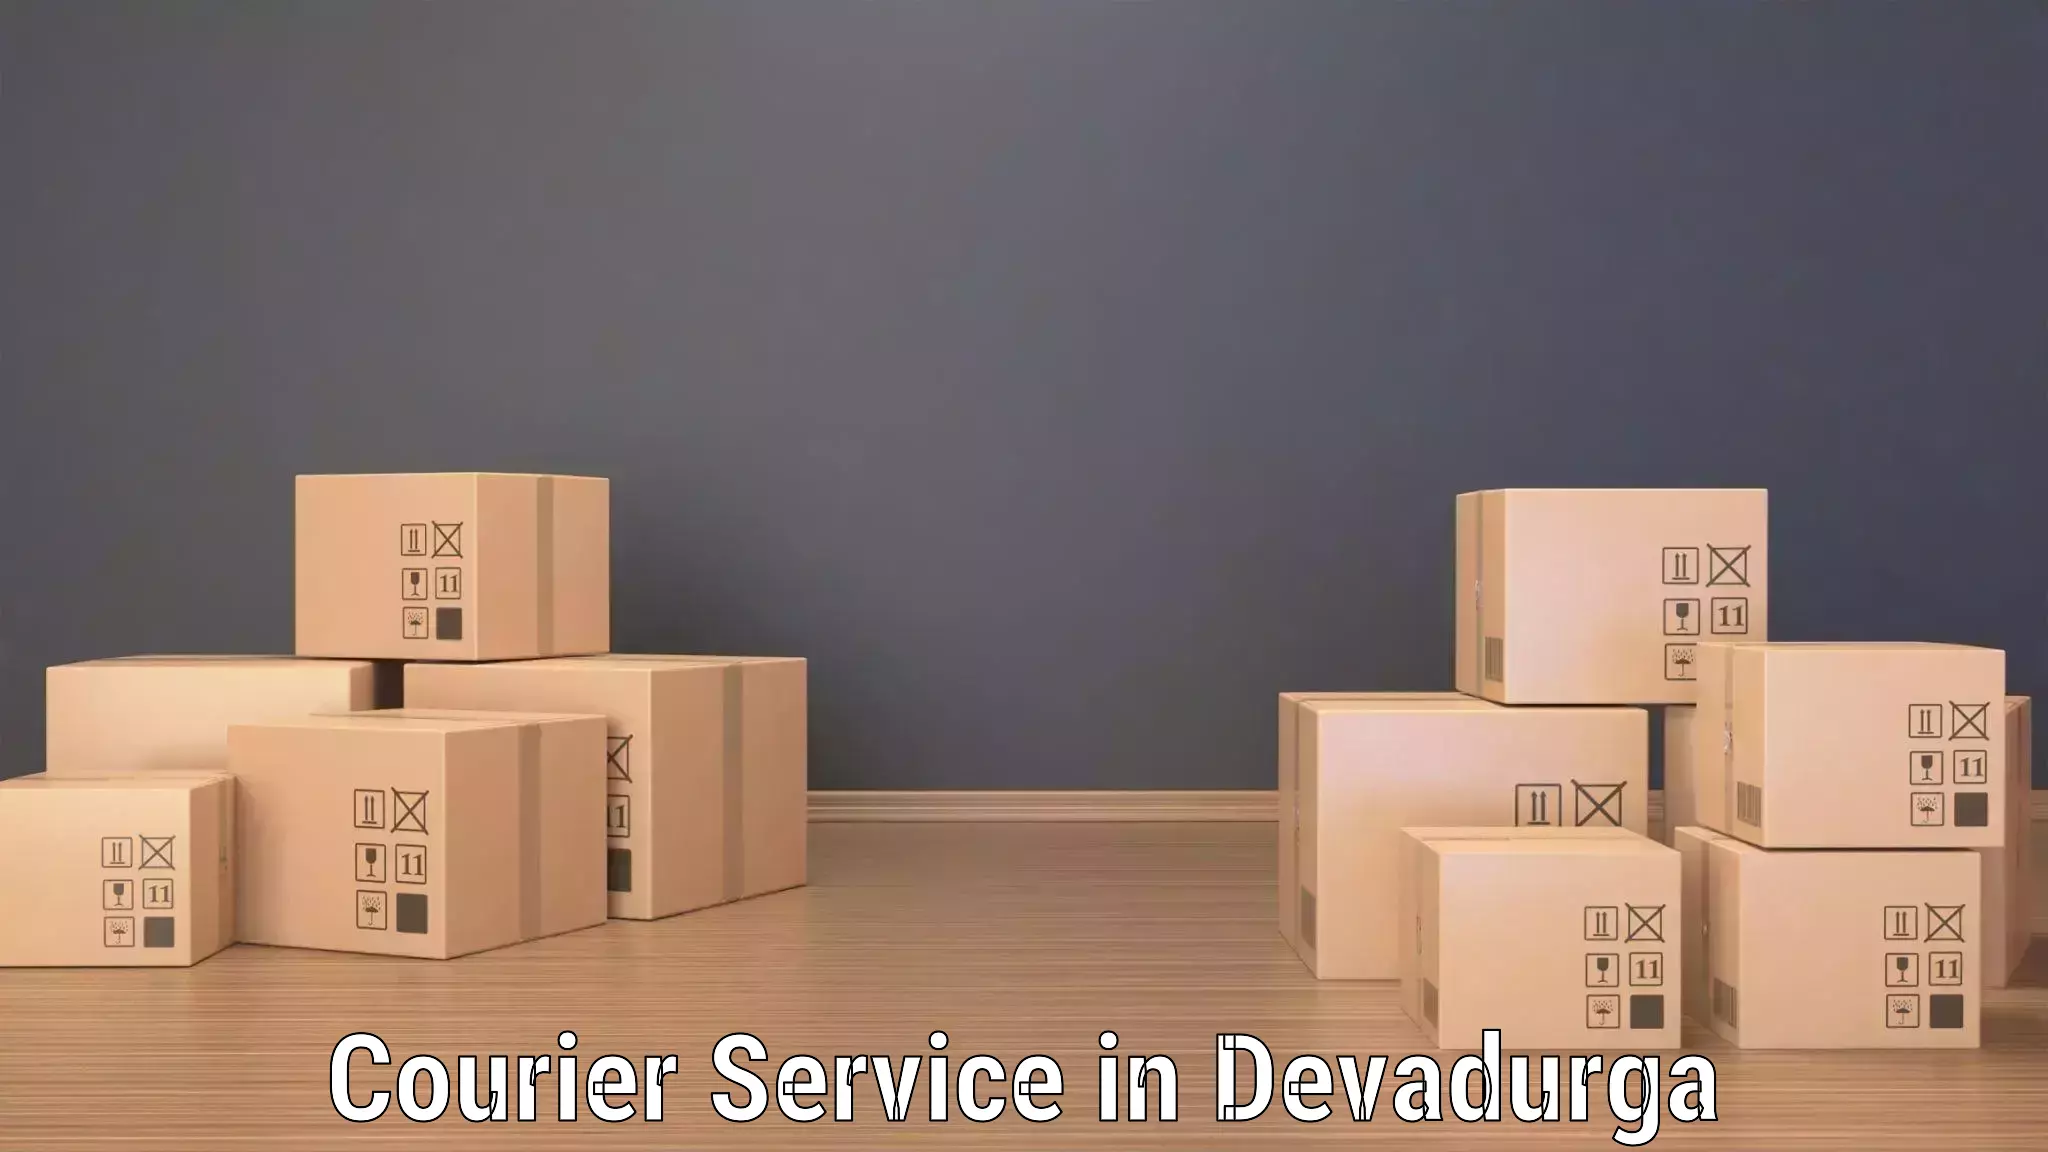 Courier service innovation in Devadurga